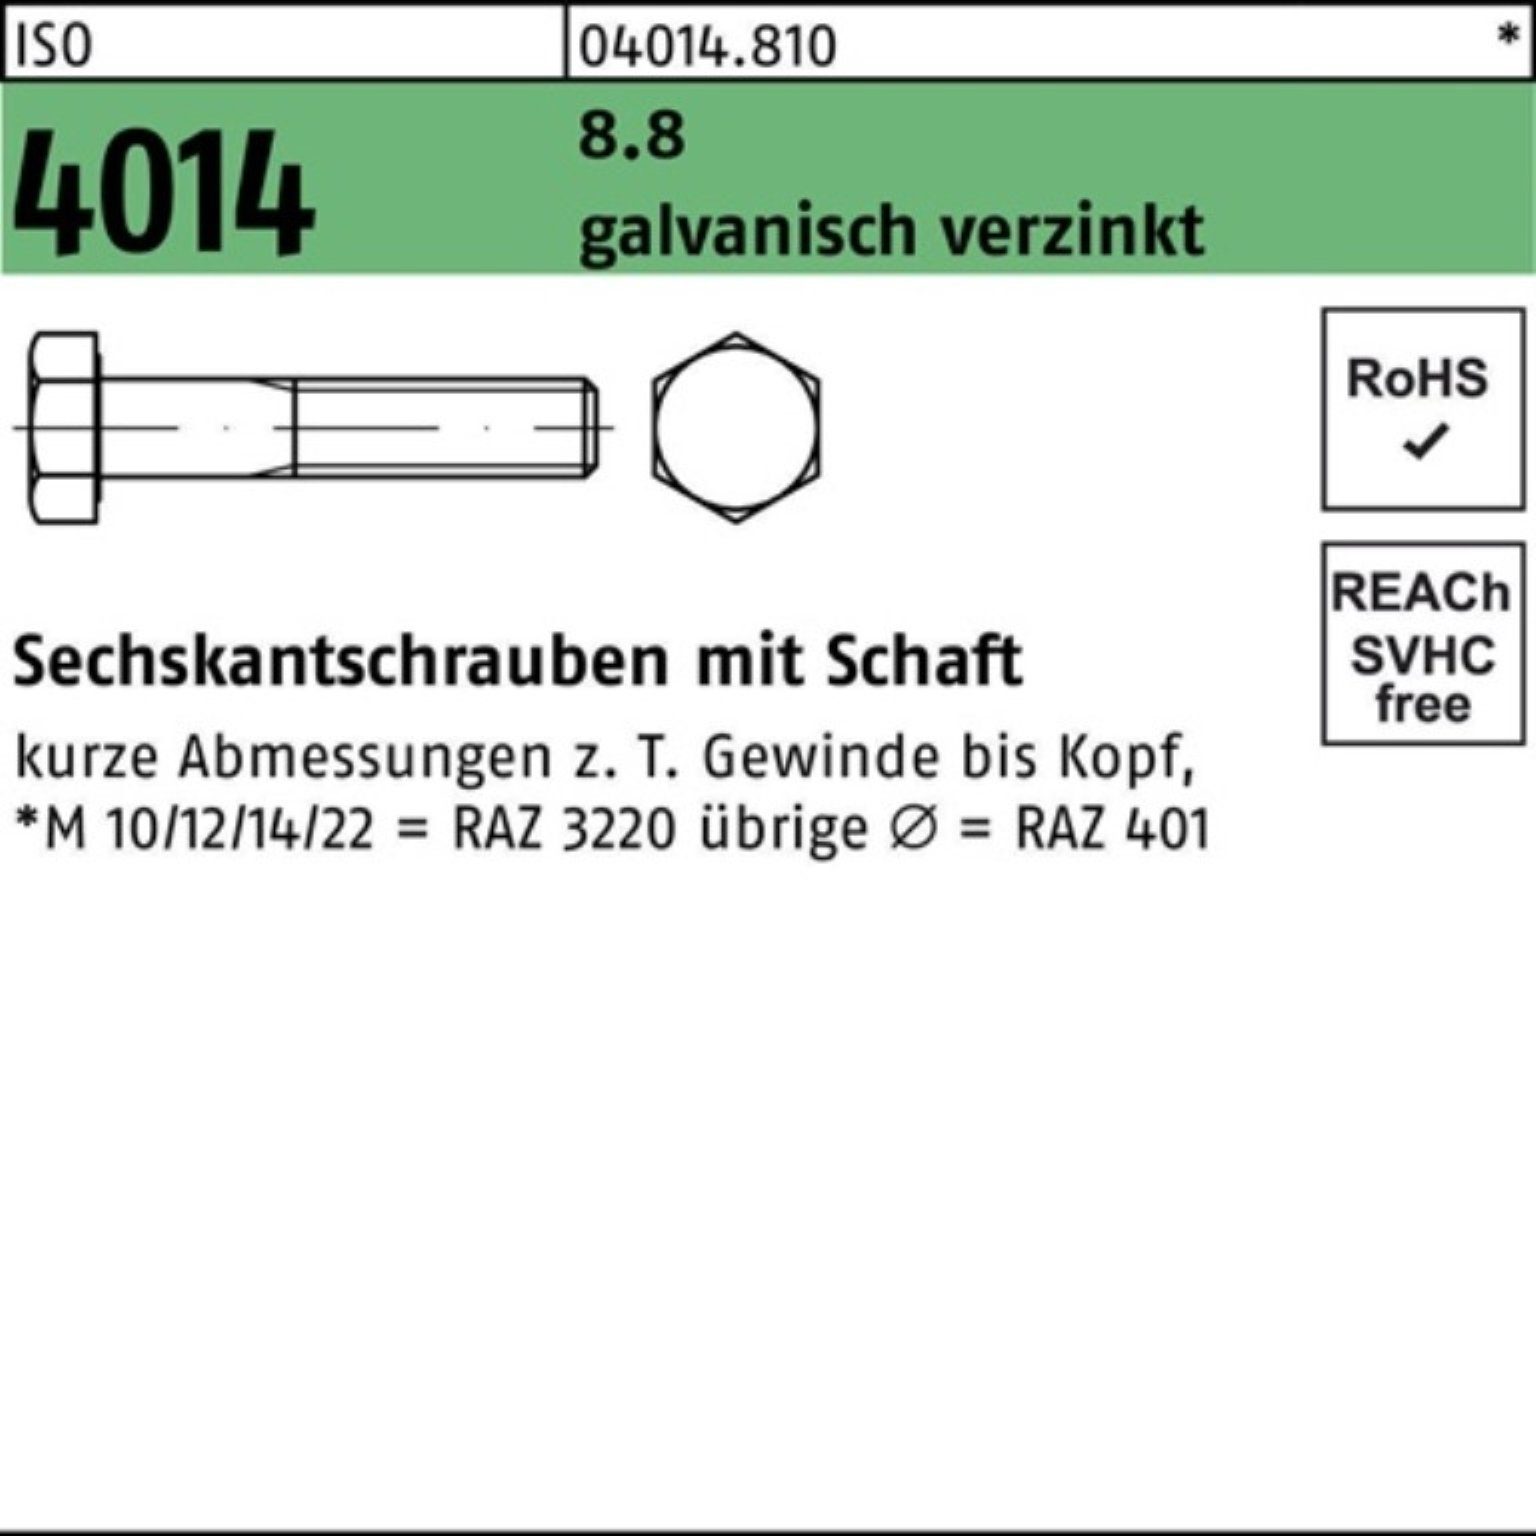 Bufab Sechskantschraube 100er Pack Sechskantschraube ISO 4014 Schaft M24x 400 8.8 galv.verz. 1 | Schrauben